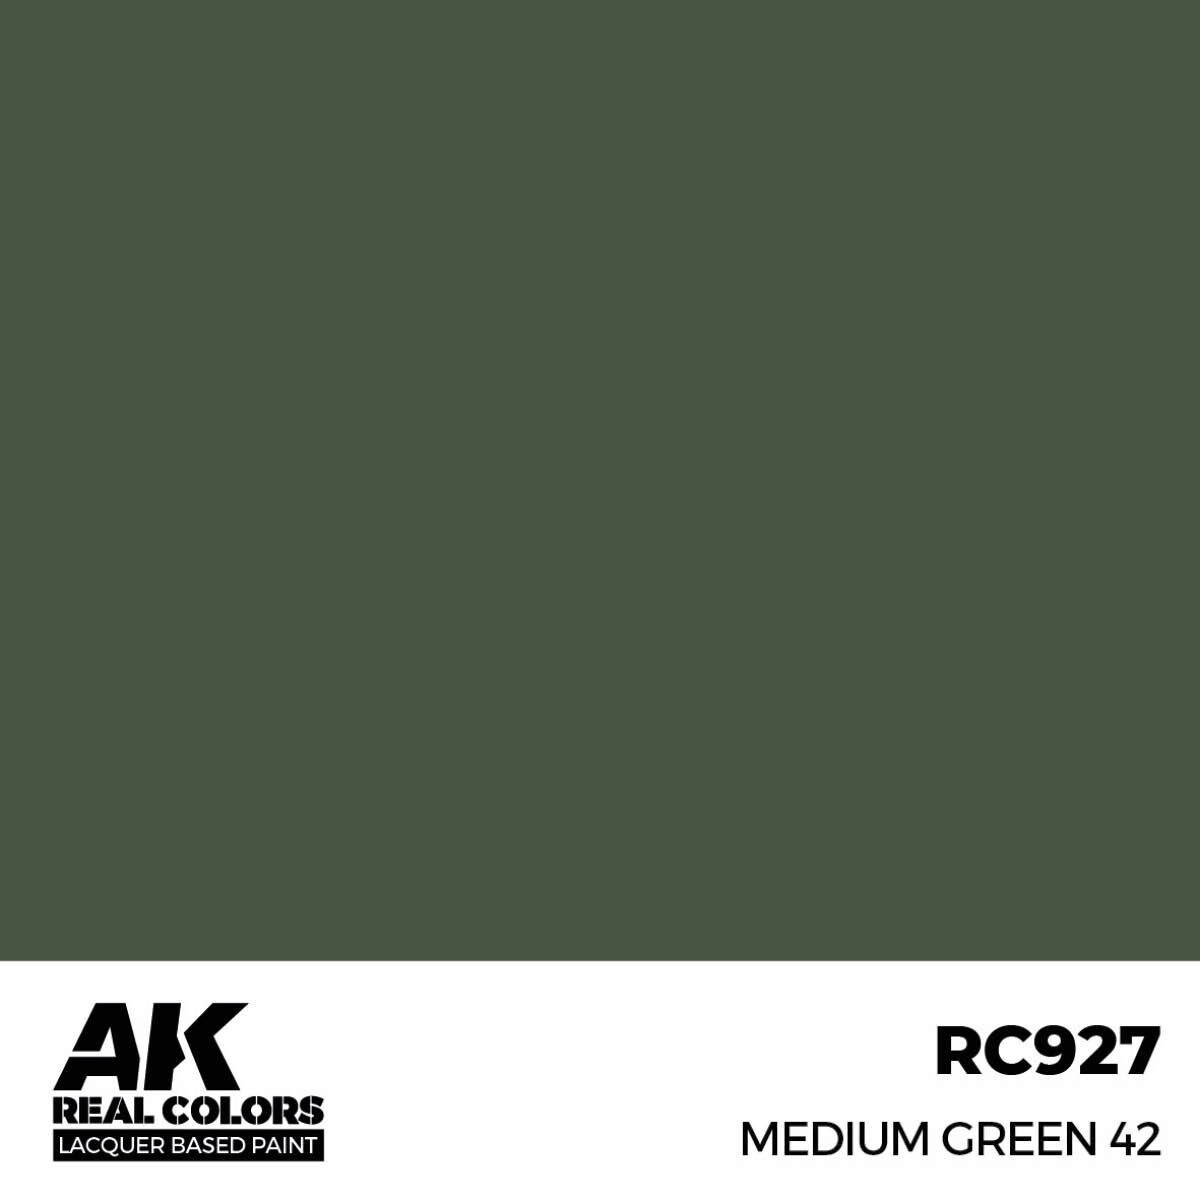 AK RC927 Real Colors Medium Green 42 17 ml.